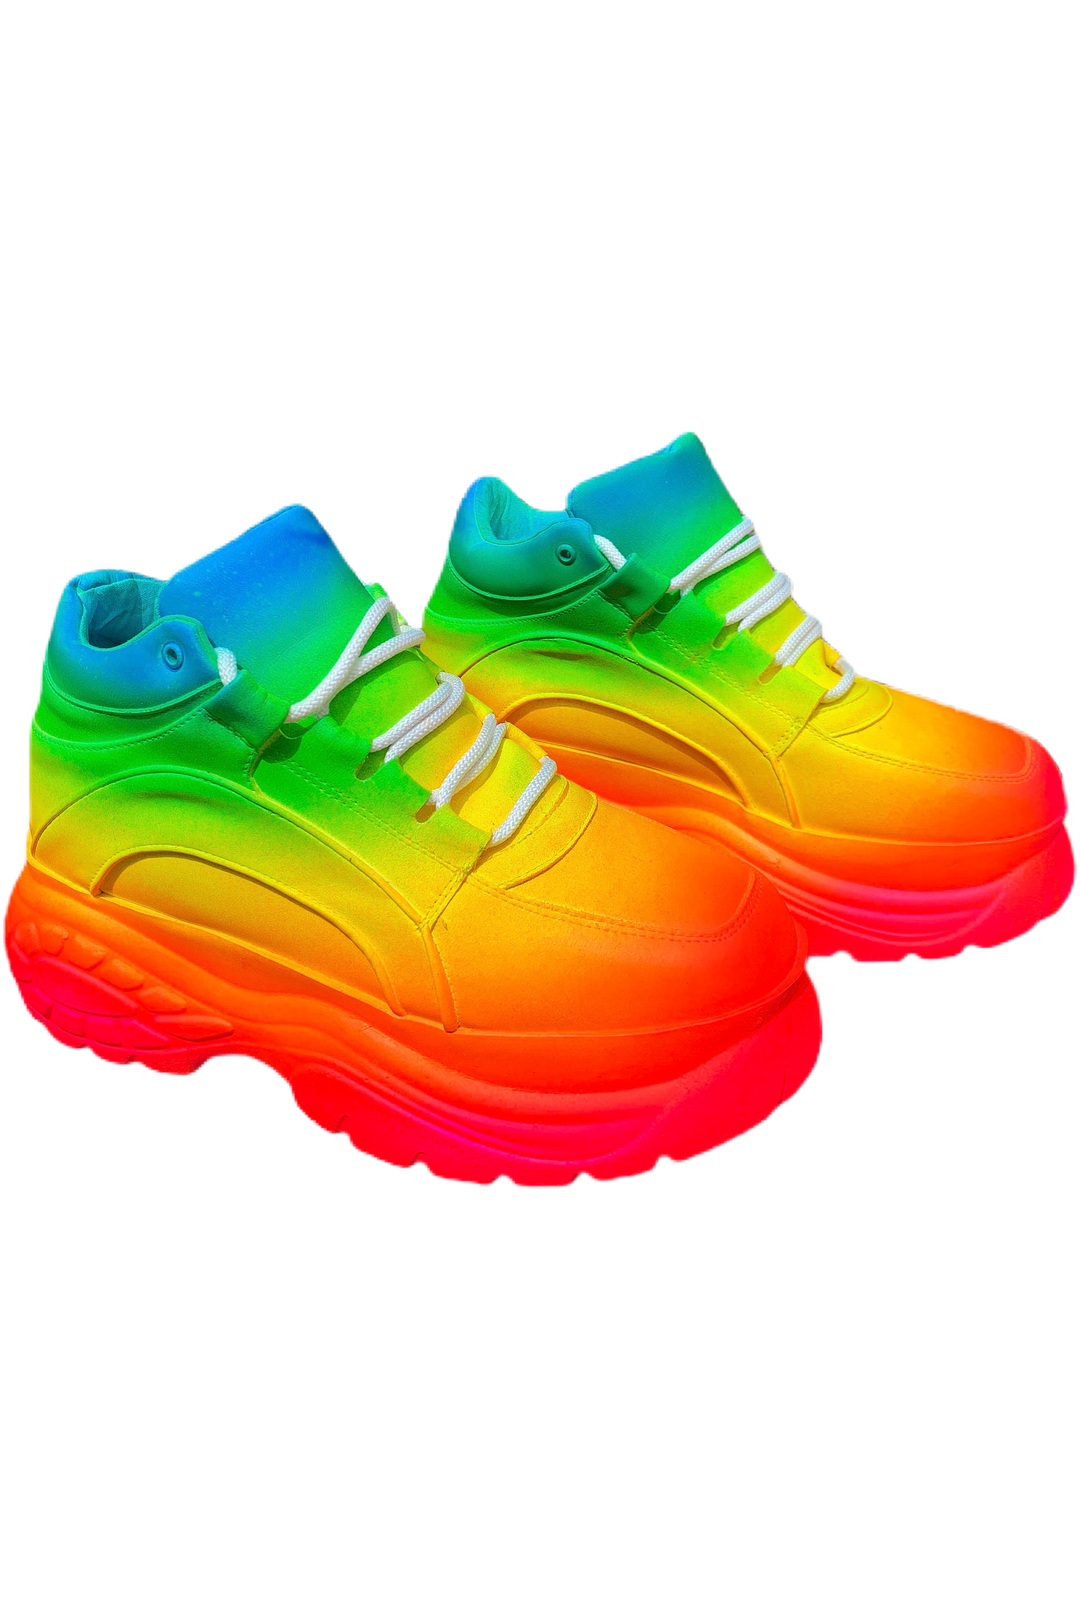 Full Spectrum Platform Sneakers